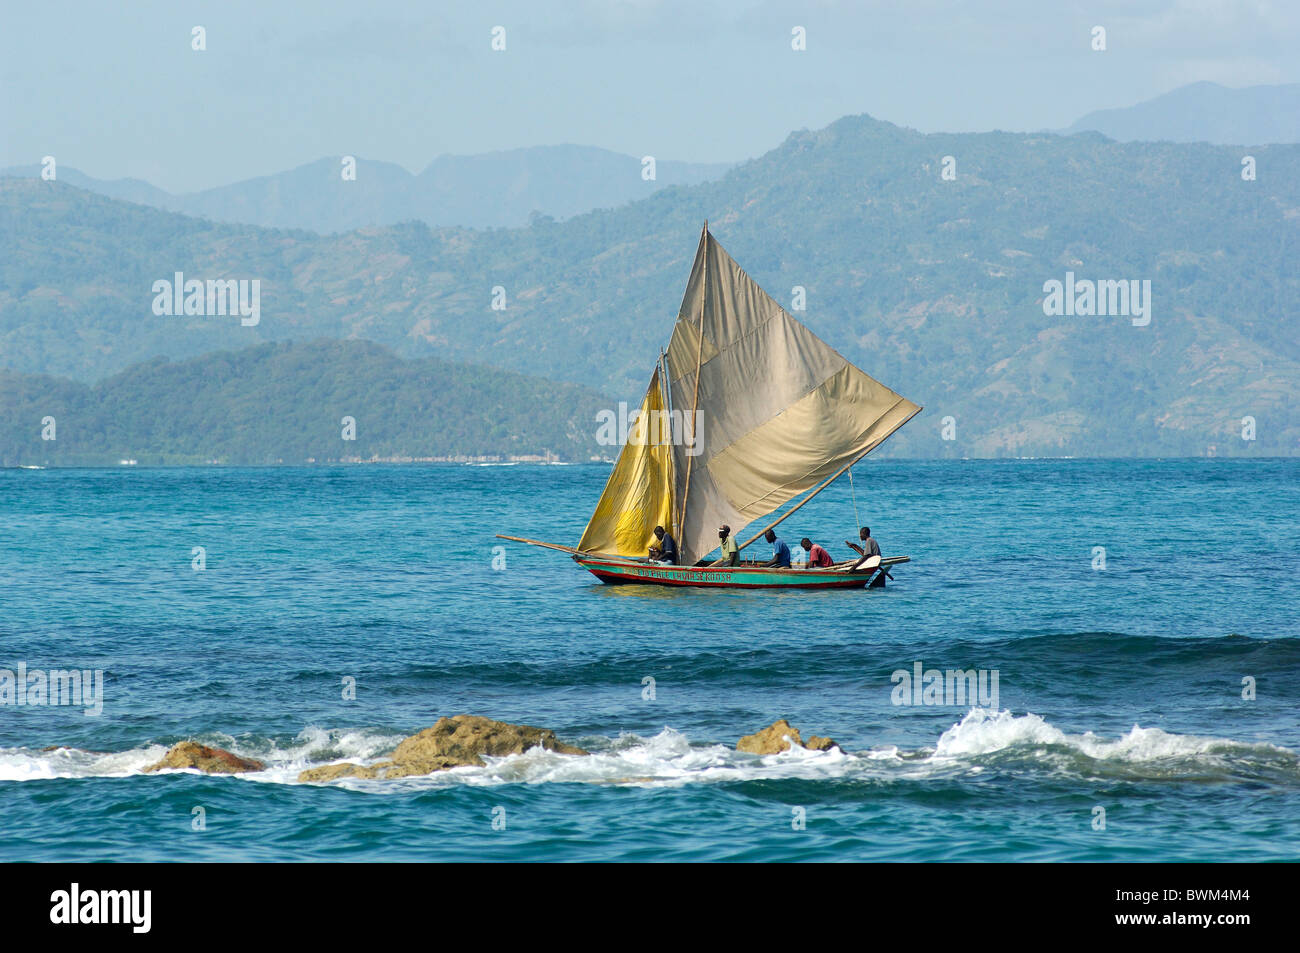 Haiti Labadee Caribbean Fishing Fisher Sailboat Boat Sea Ocean Coast Stock Photo